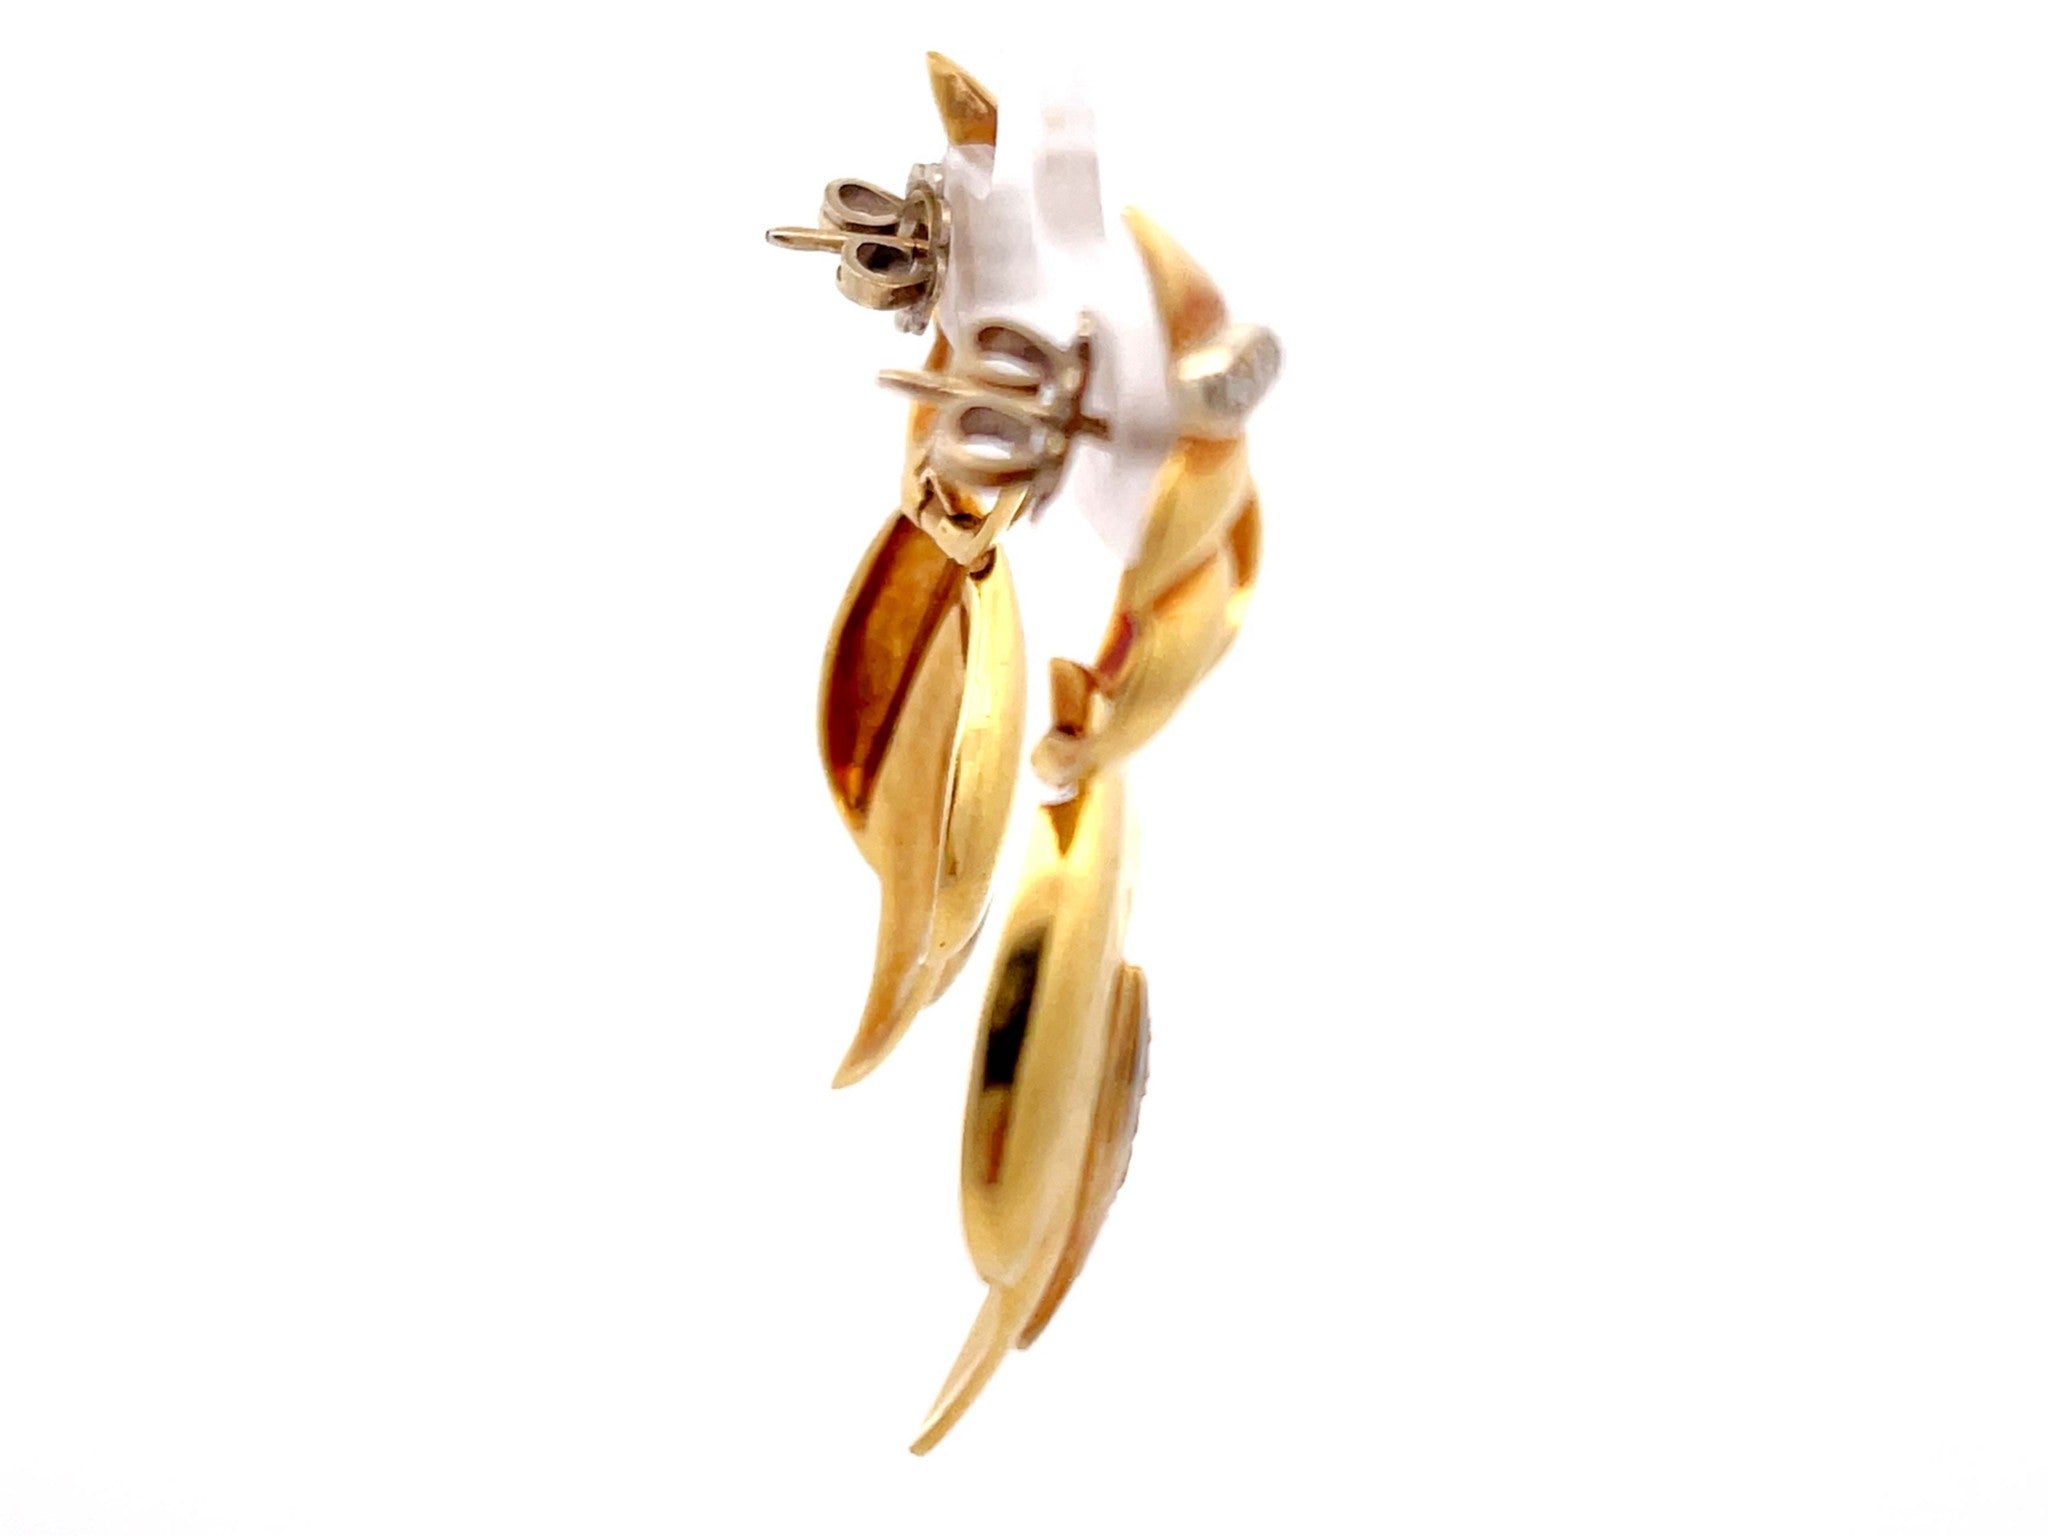 Vintage Gold Diamond Dangle Earrings in 14k Yellow Gold